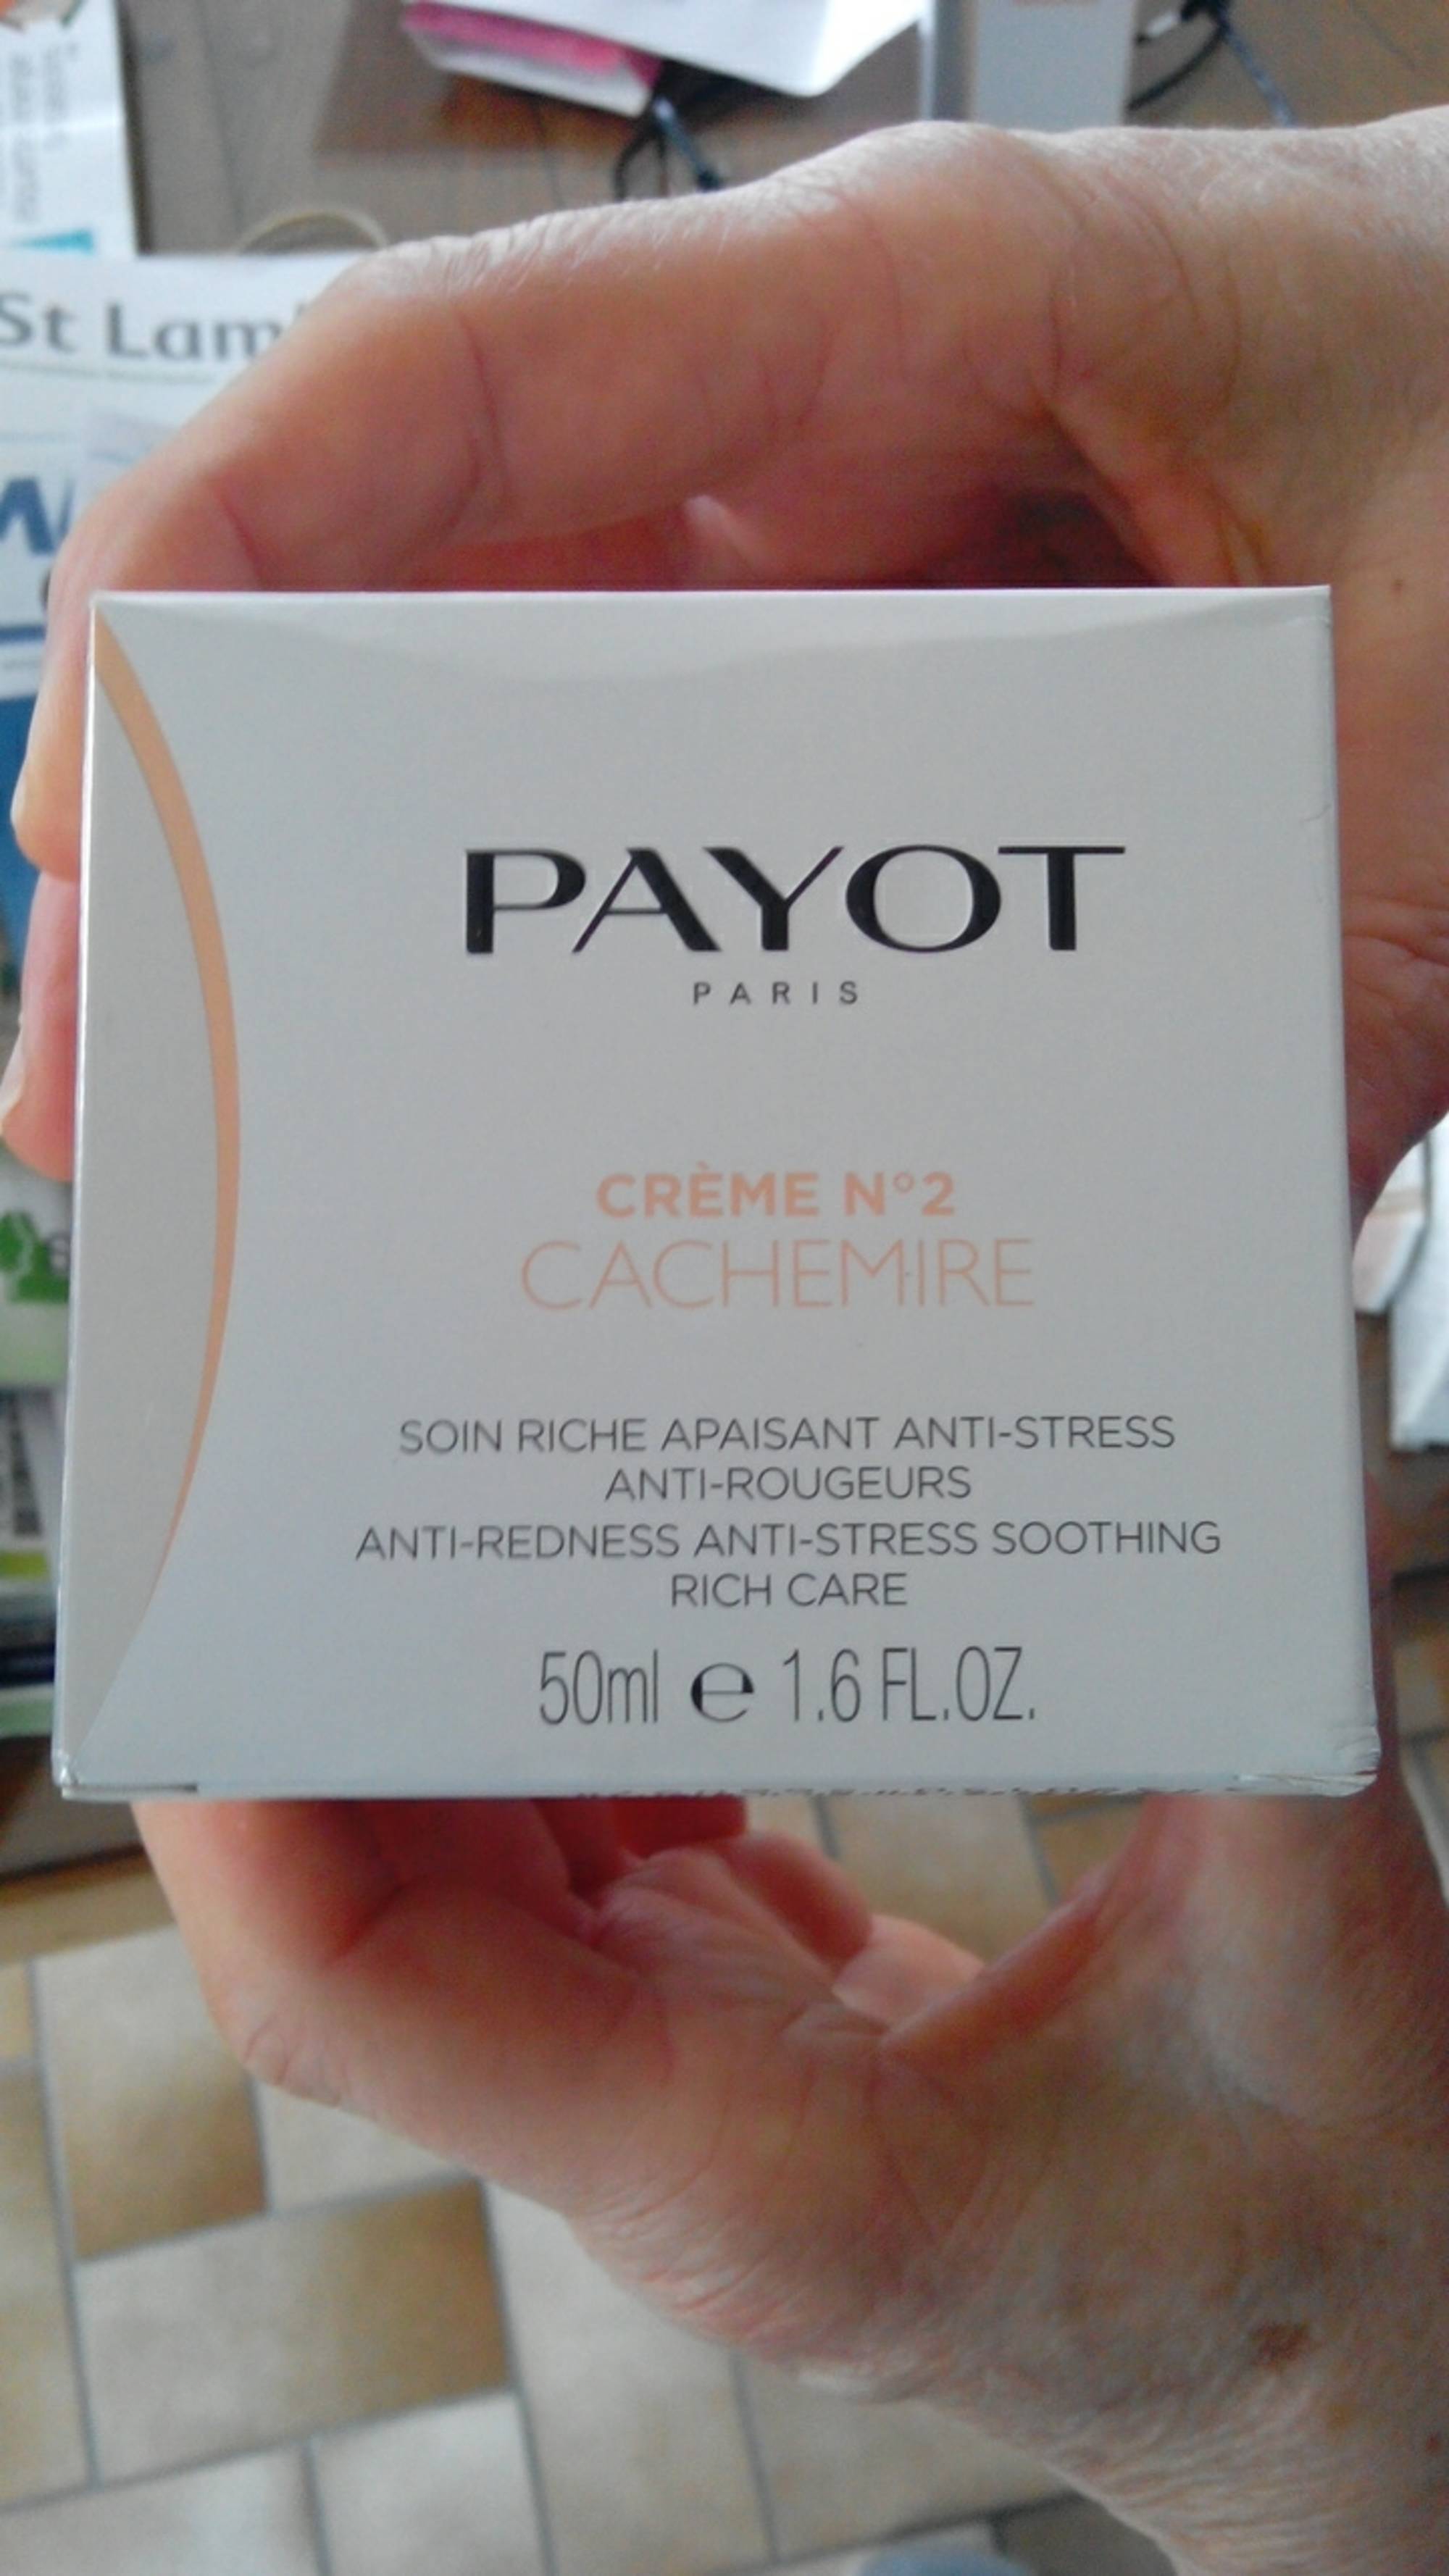 PAYOT - Crème n°2 cachemire - Soin riche apaisant anti-stress, anti-rougeurs